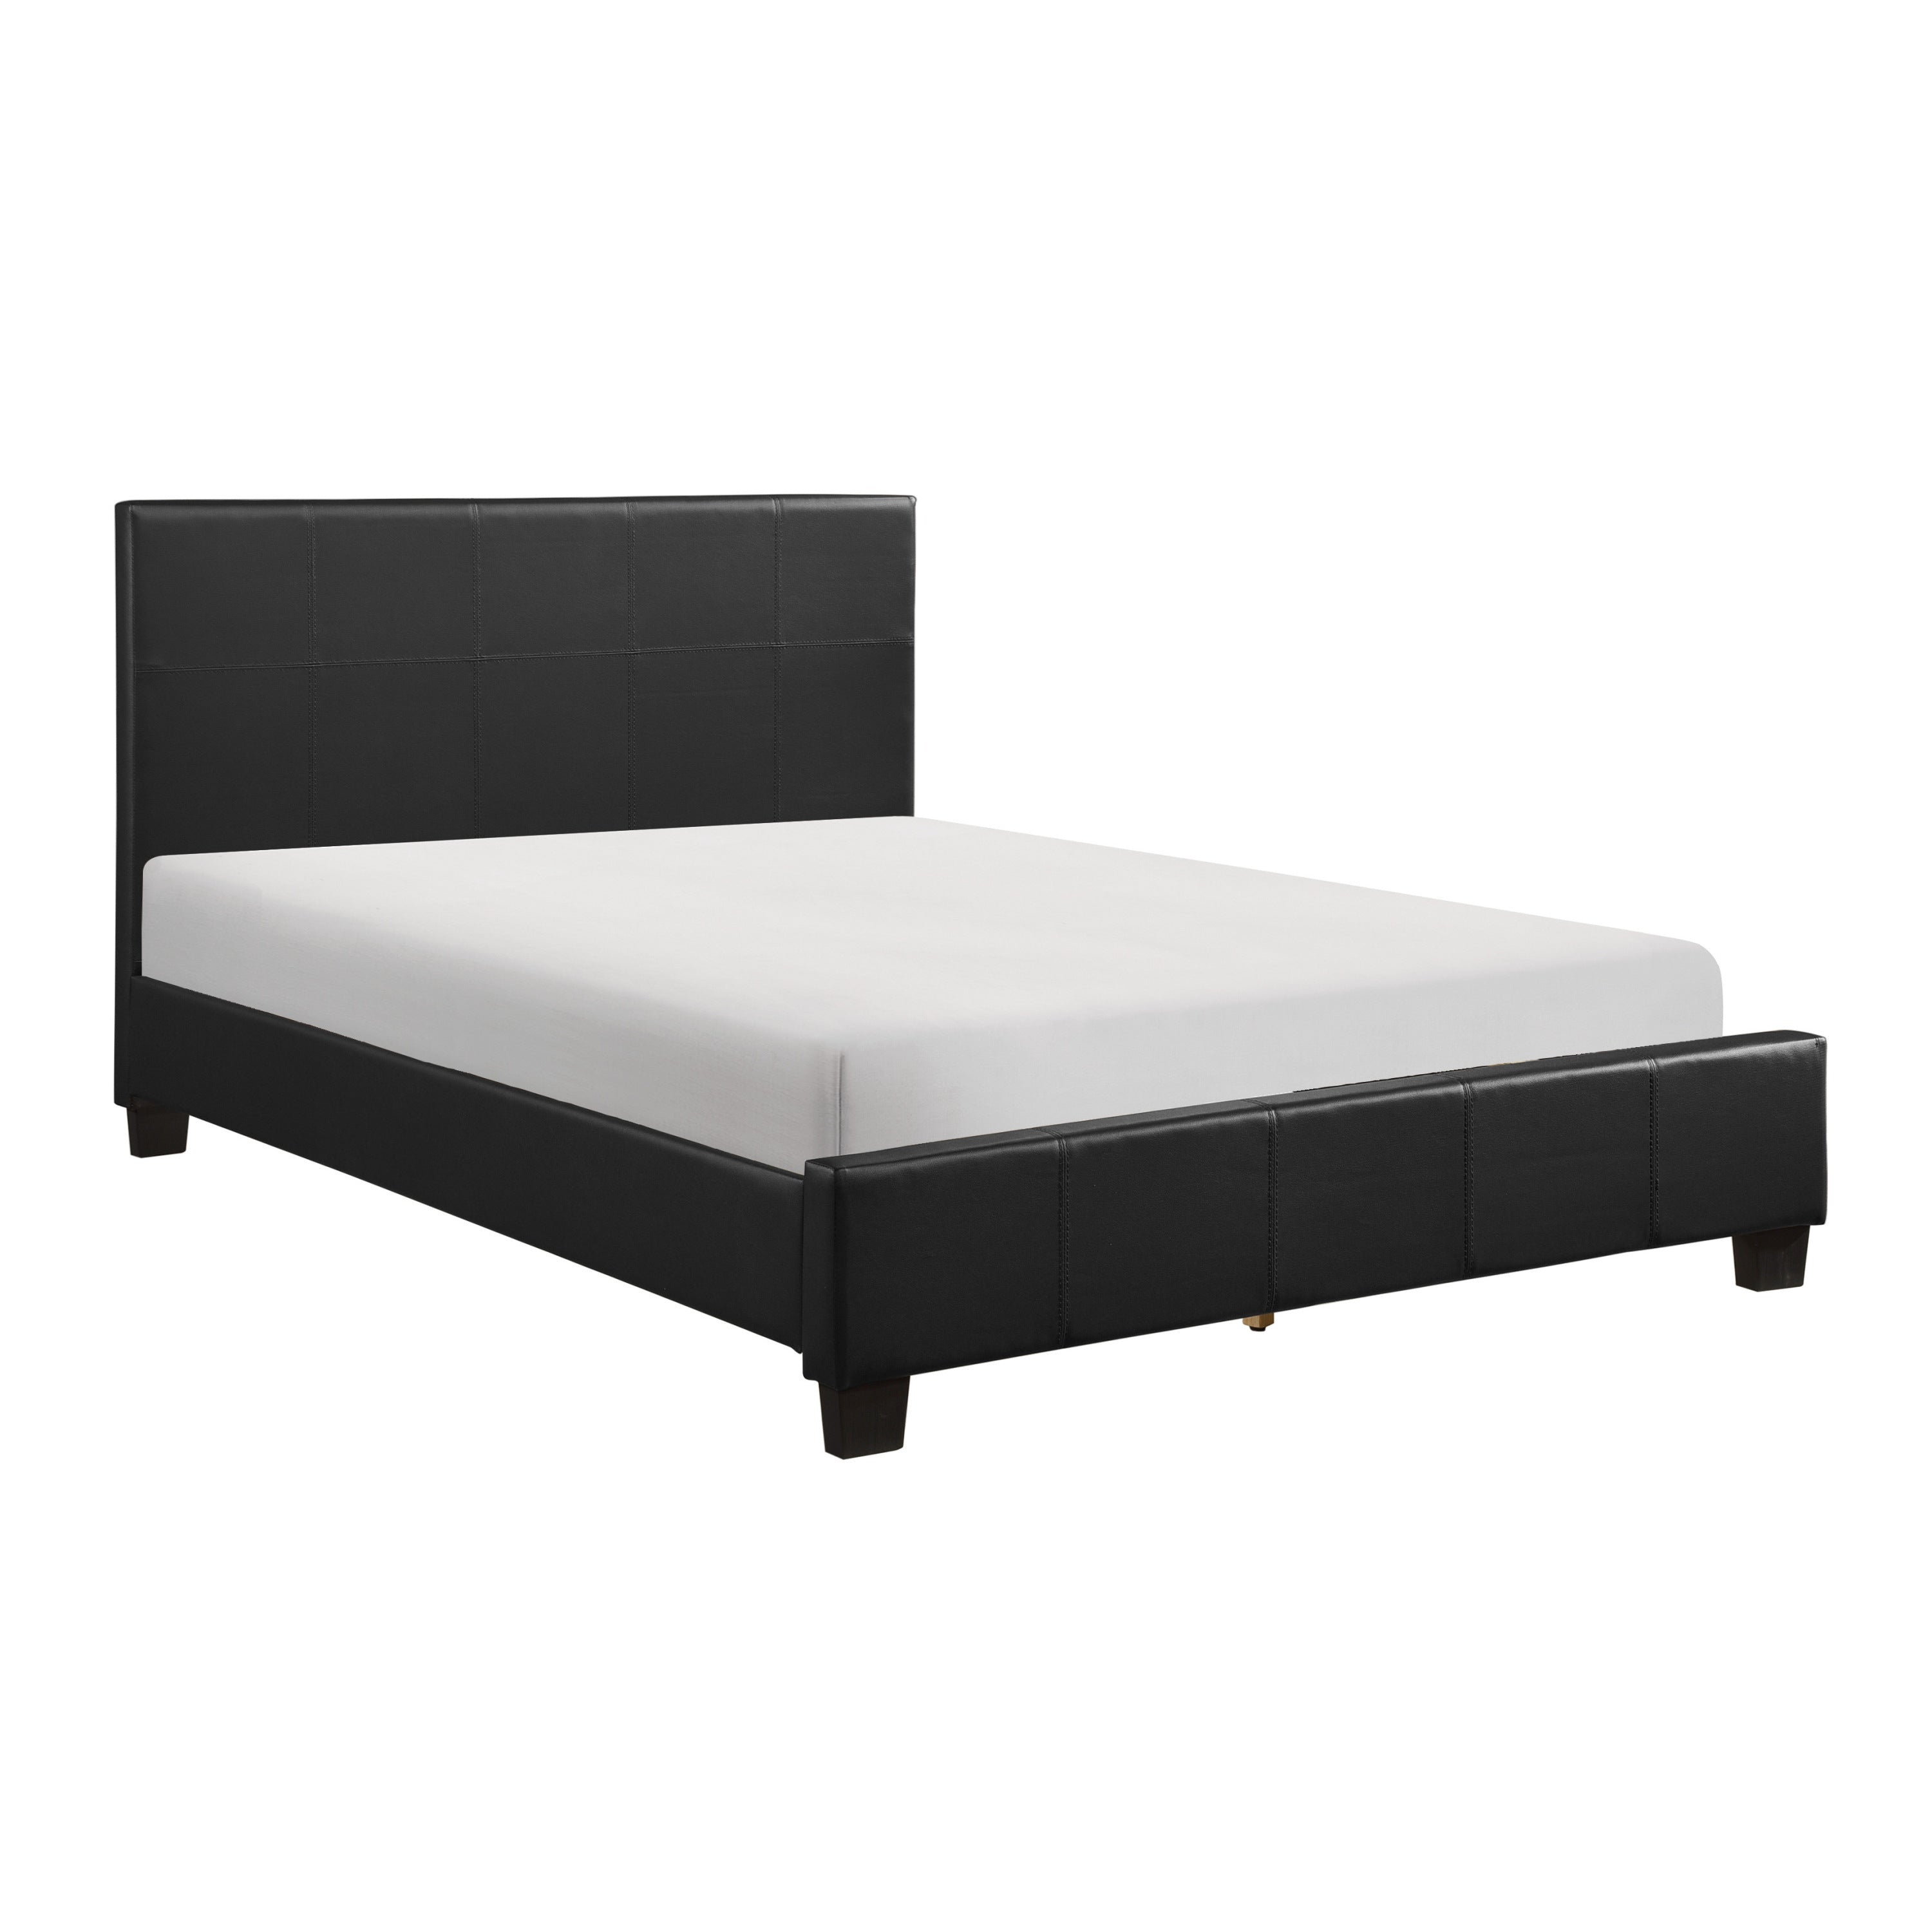 King Size Bed Leather Upholstered (Black)